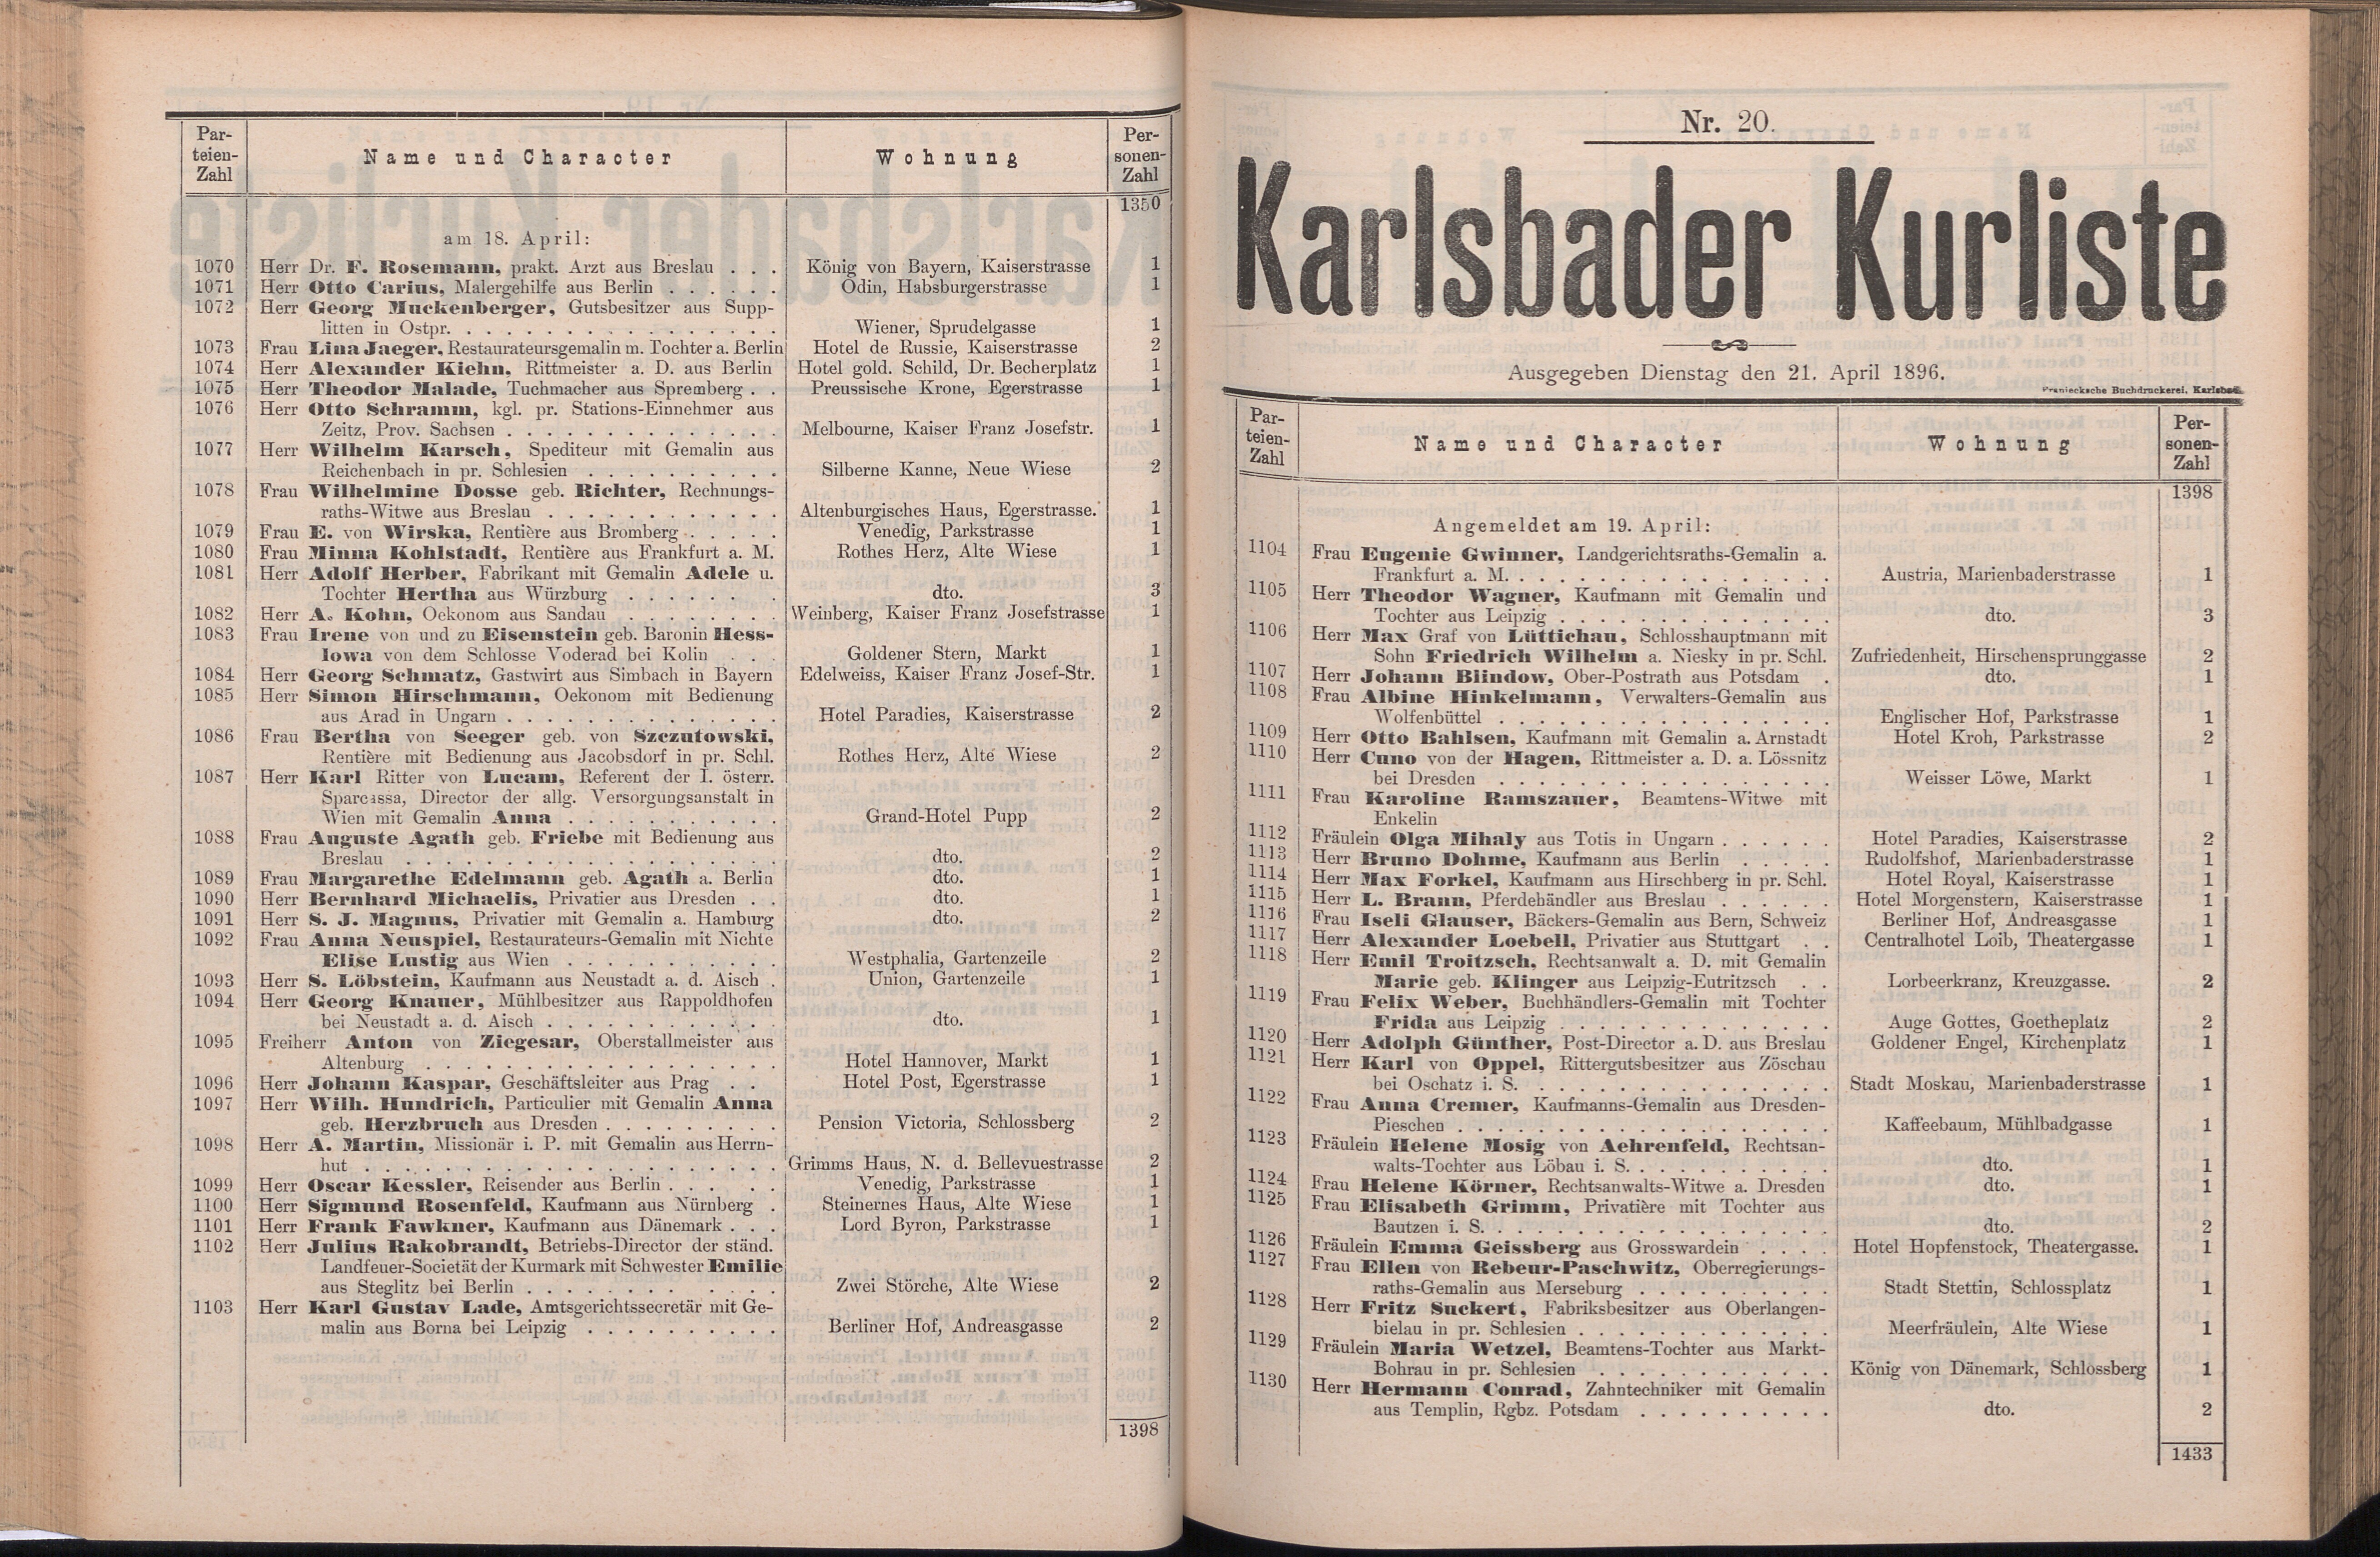 93. soap-kv_knihovna_karlsbader-kurliste-1896_0940